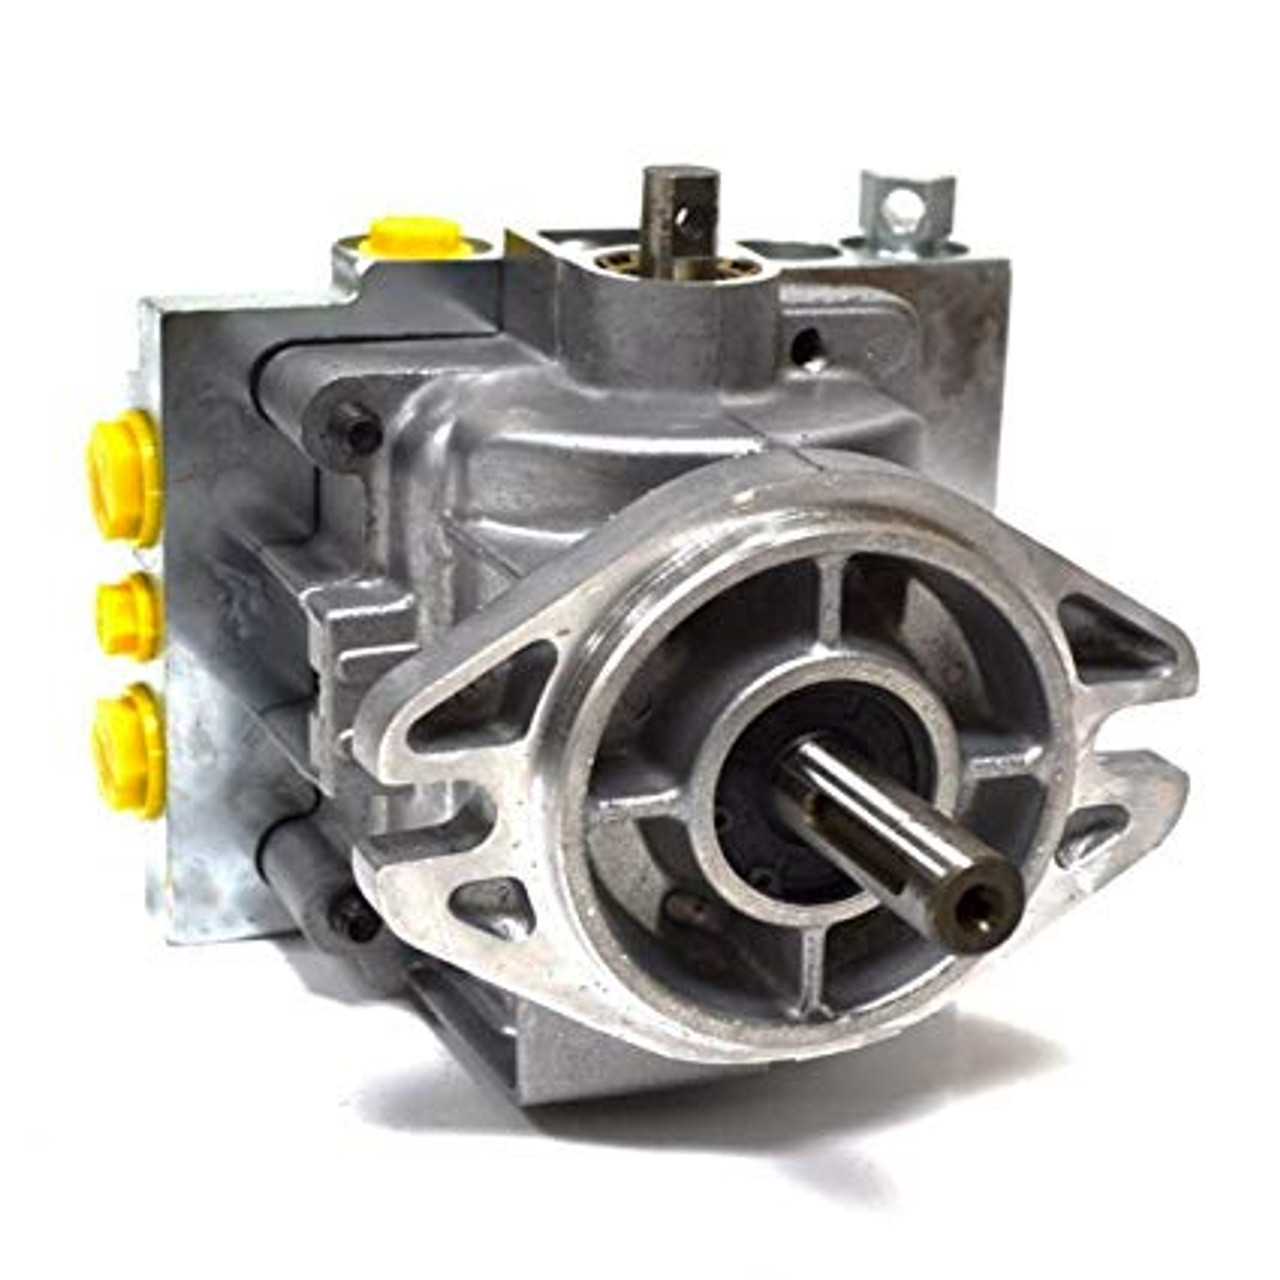 Hydro Gear Replacement Pump PL-BGQQ-DY1X-XXXX / Ariens Lawn Mowers & Others / 927990, 24090, 48551, BDP-10L-117 (2 Pack)